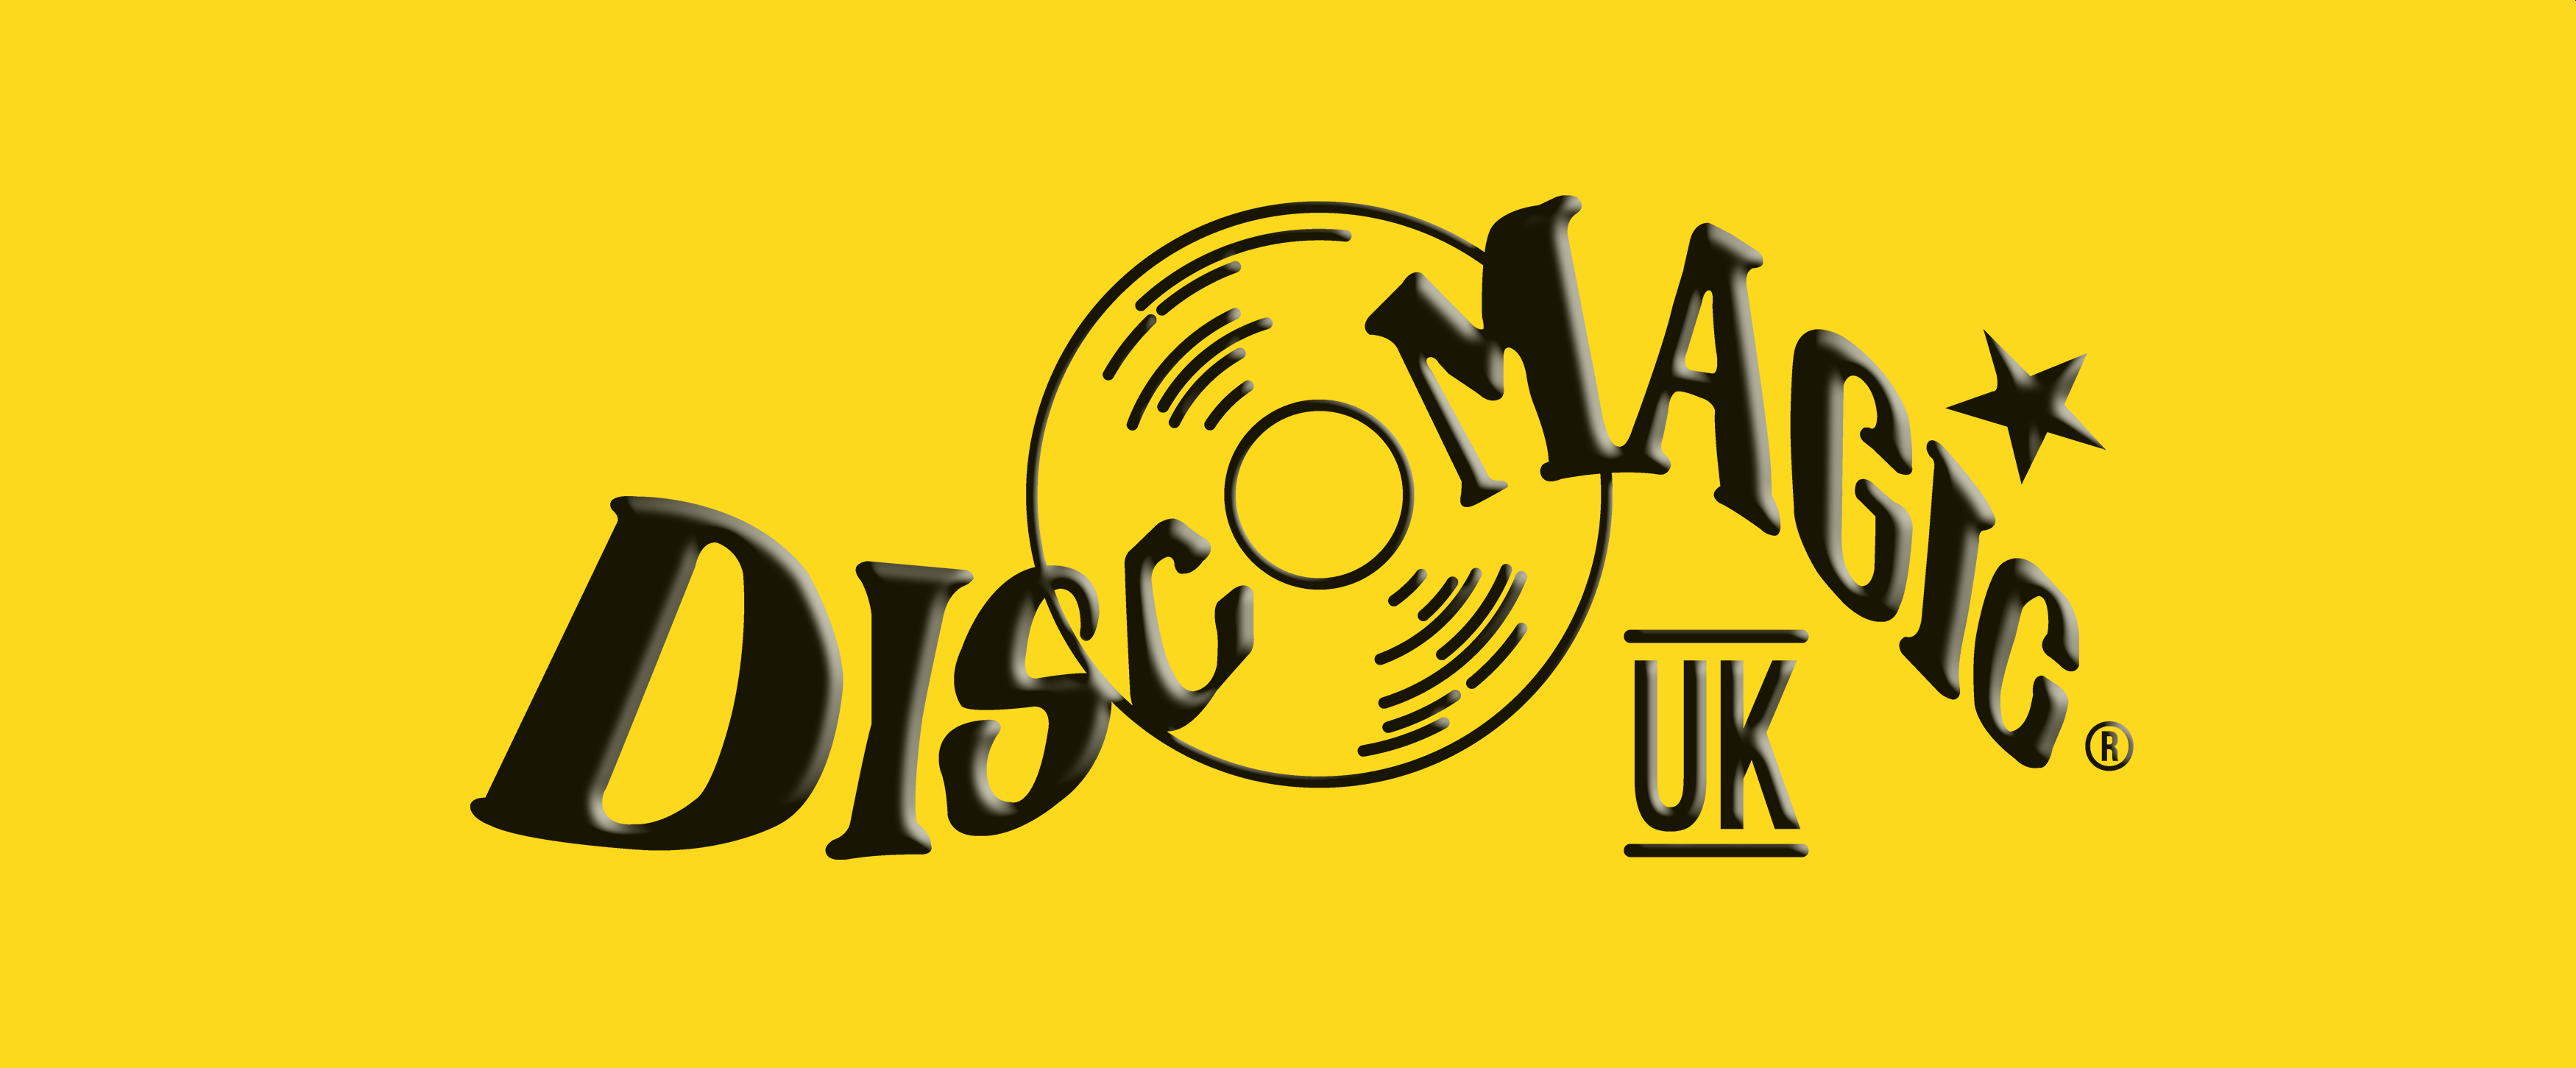 THE DISCO MAGIC UK ARCHIVES